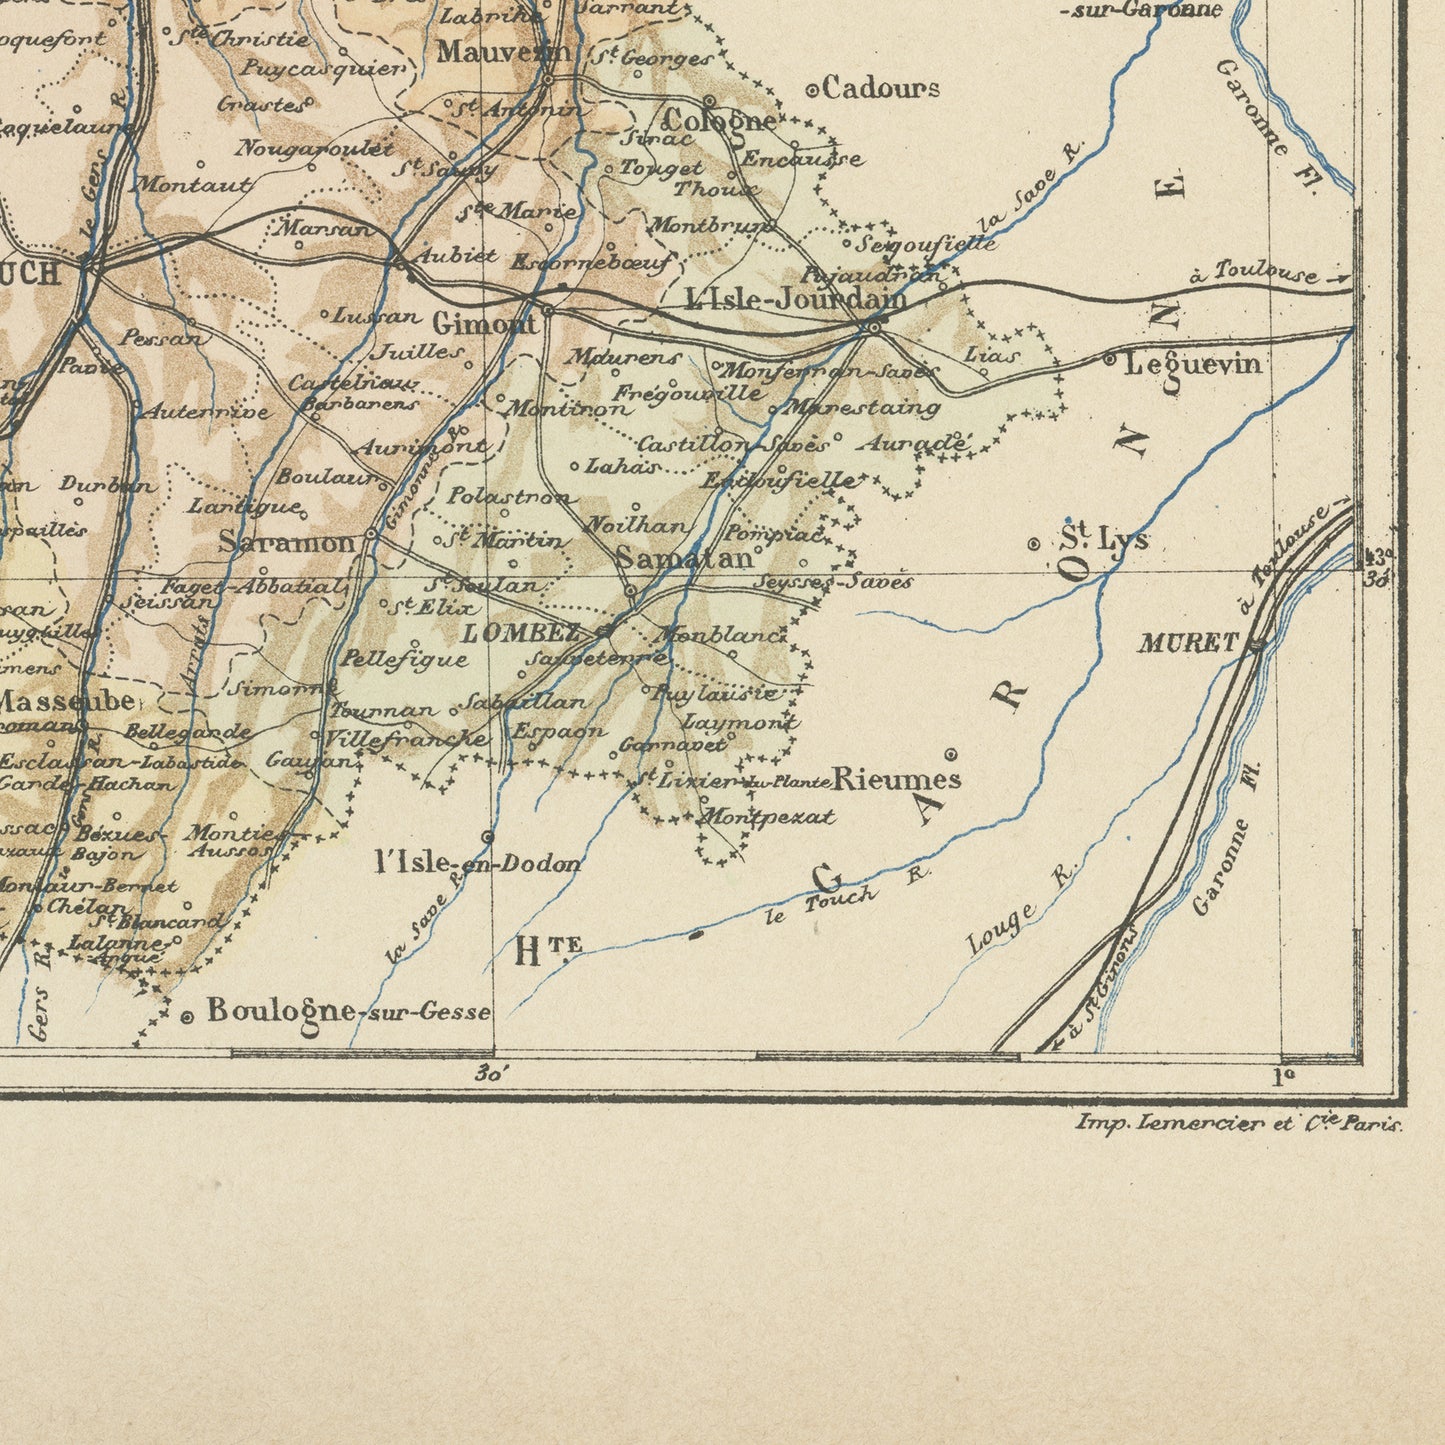 1892 Antique Gers Map - France Departement